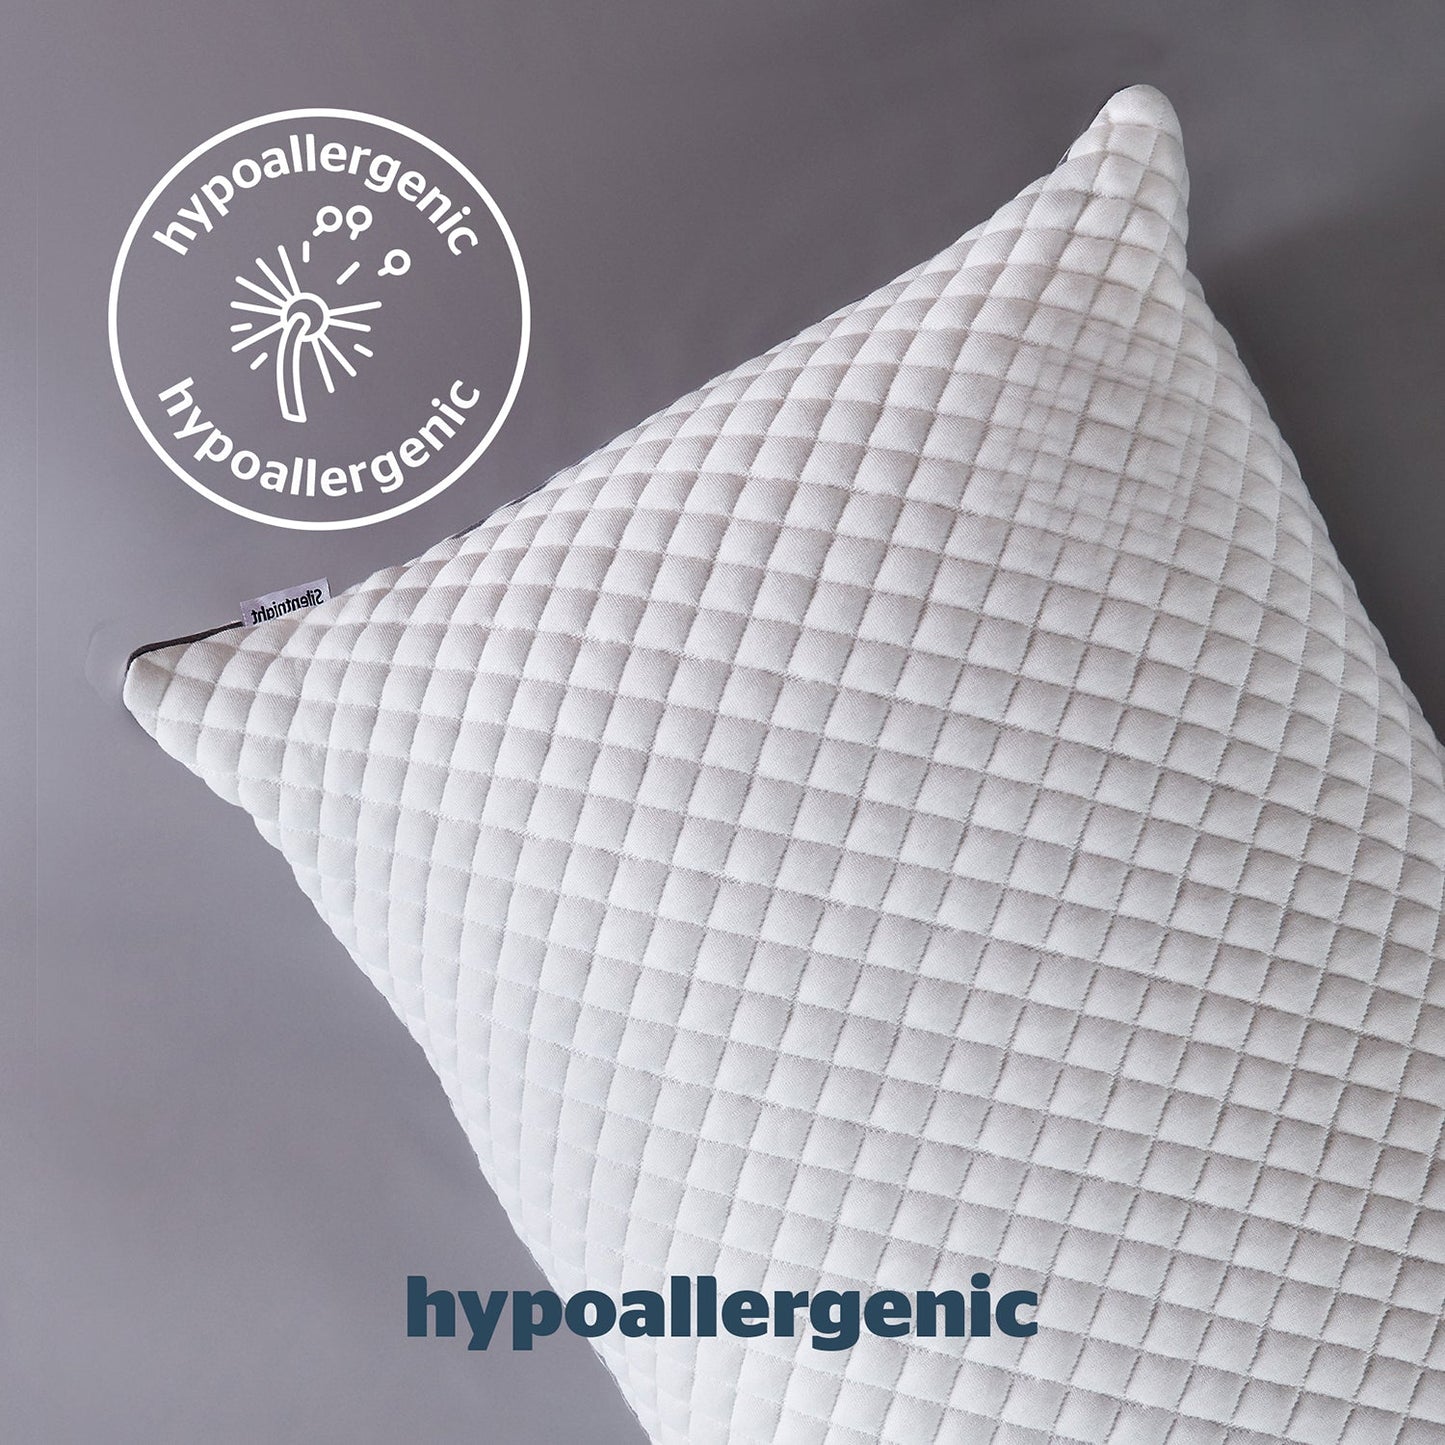 Silentnight Luxury Air Comfort Pillow - Medium Support